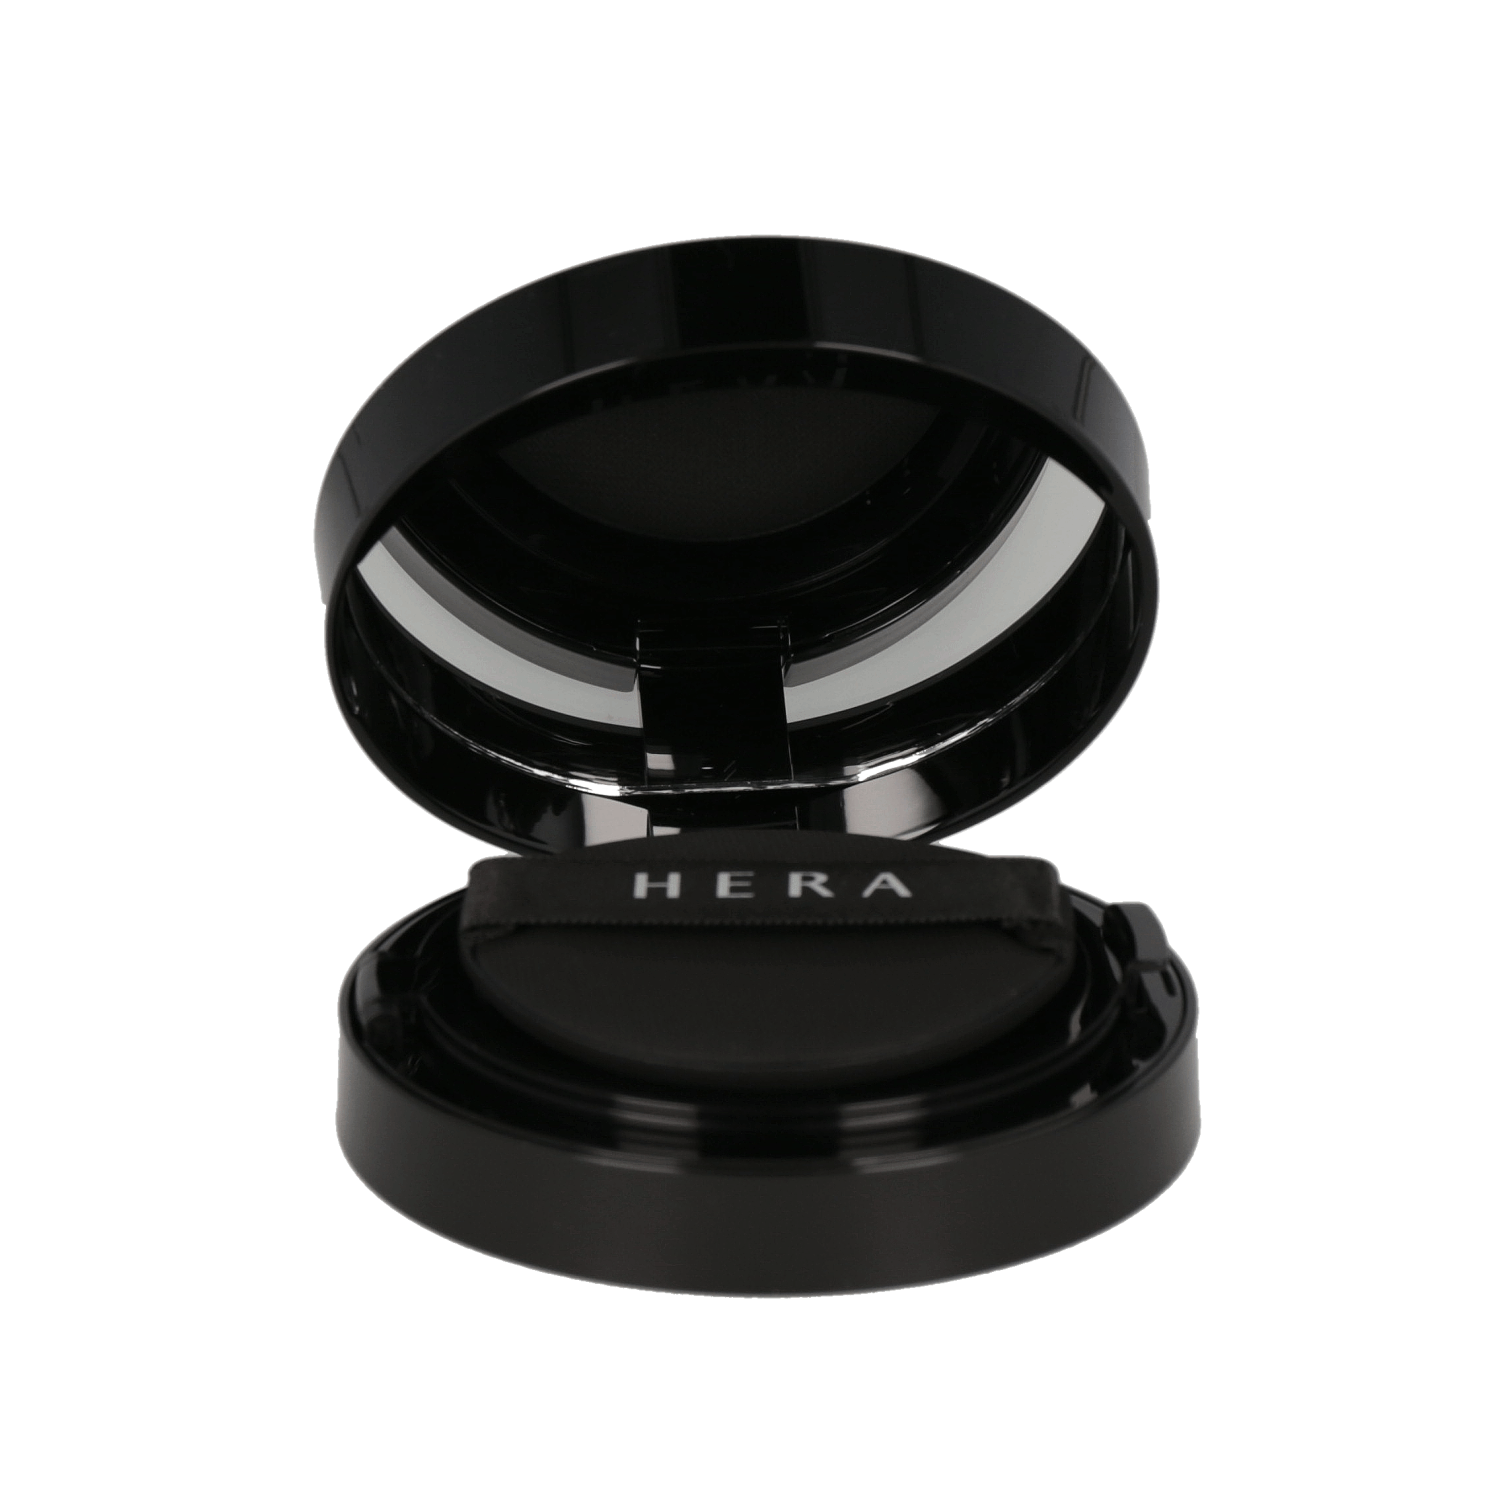 Hera New Black Cushion SPF34/PA ++ 15G x 2EA (Original+ Nachfüllung)